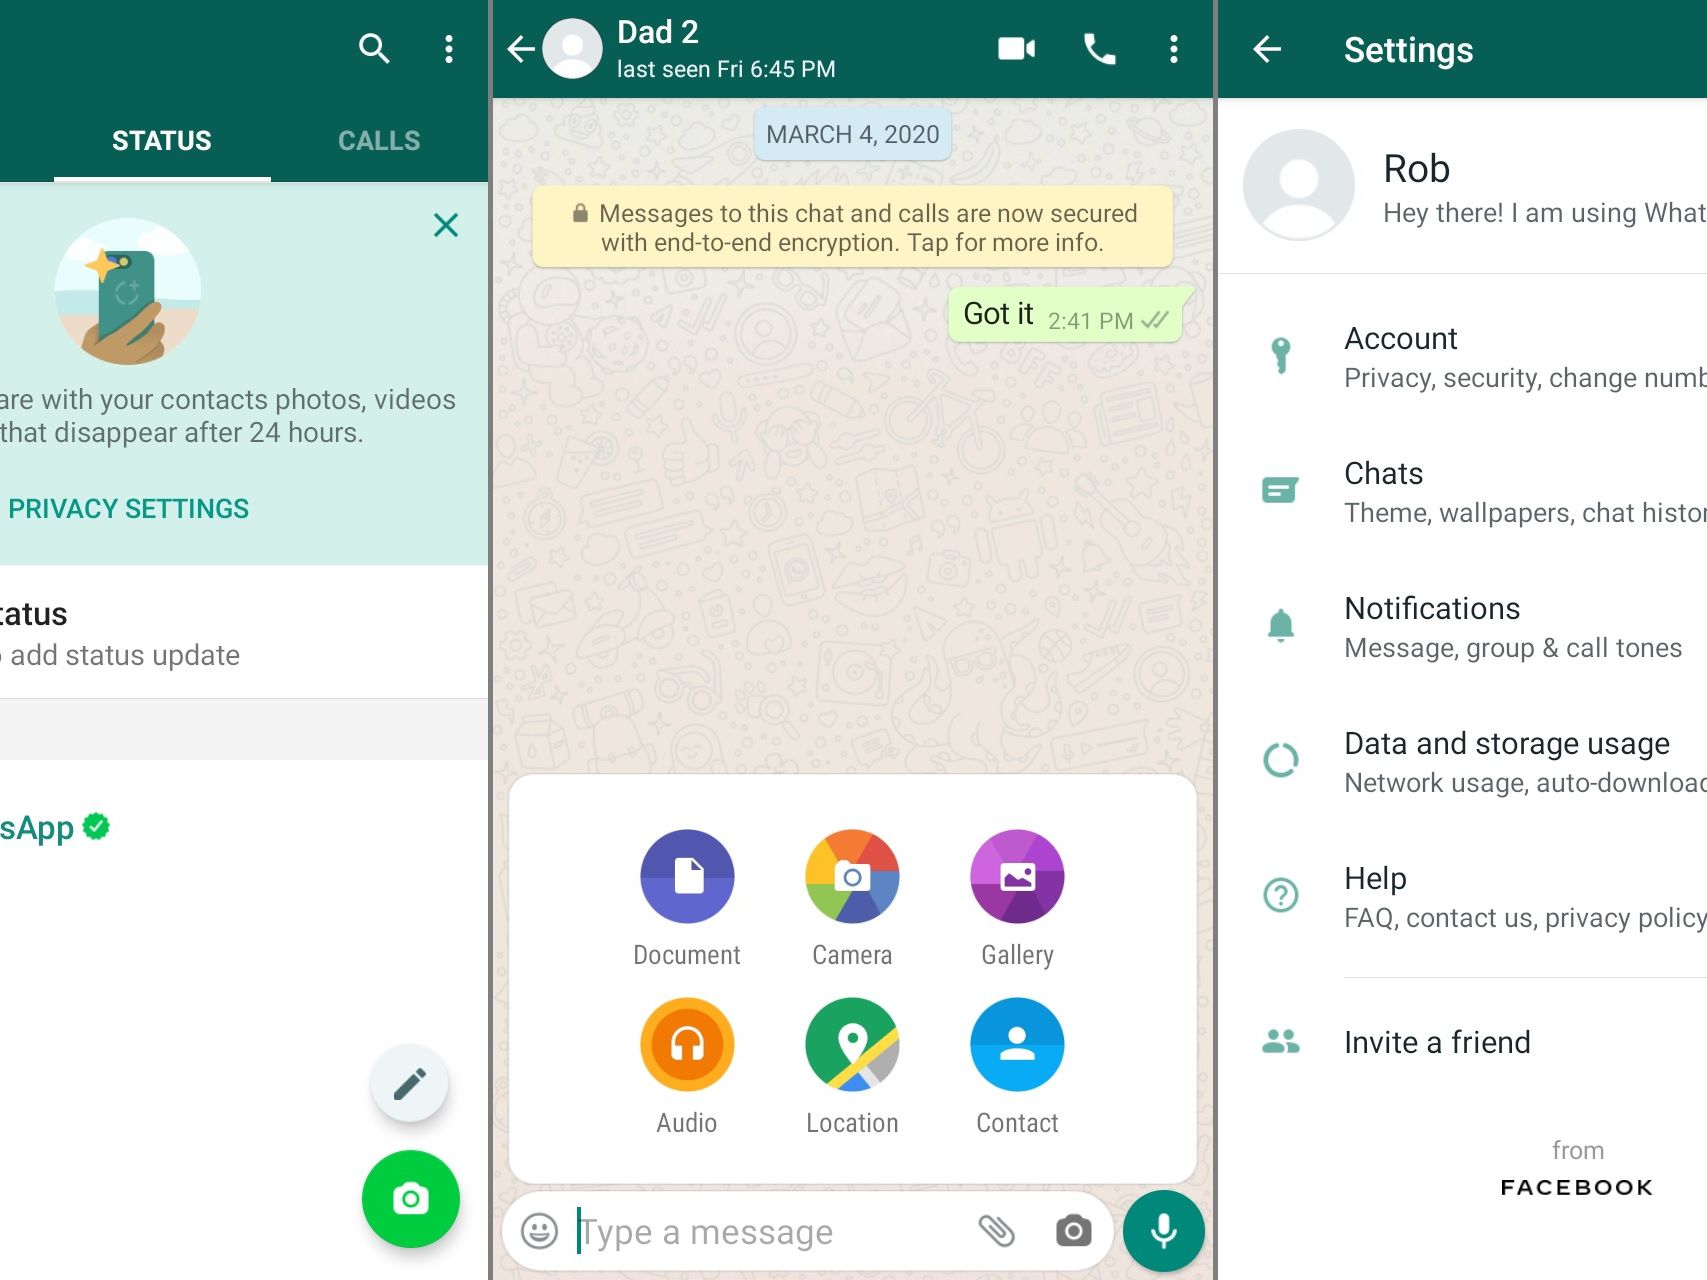 features of messaging App